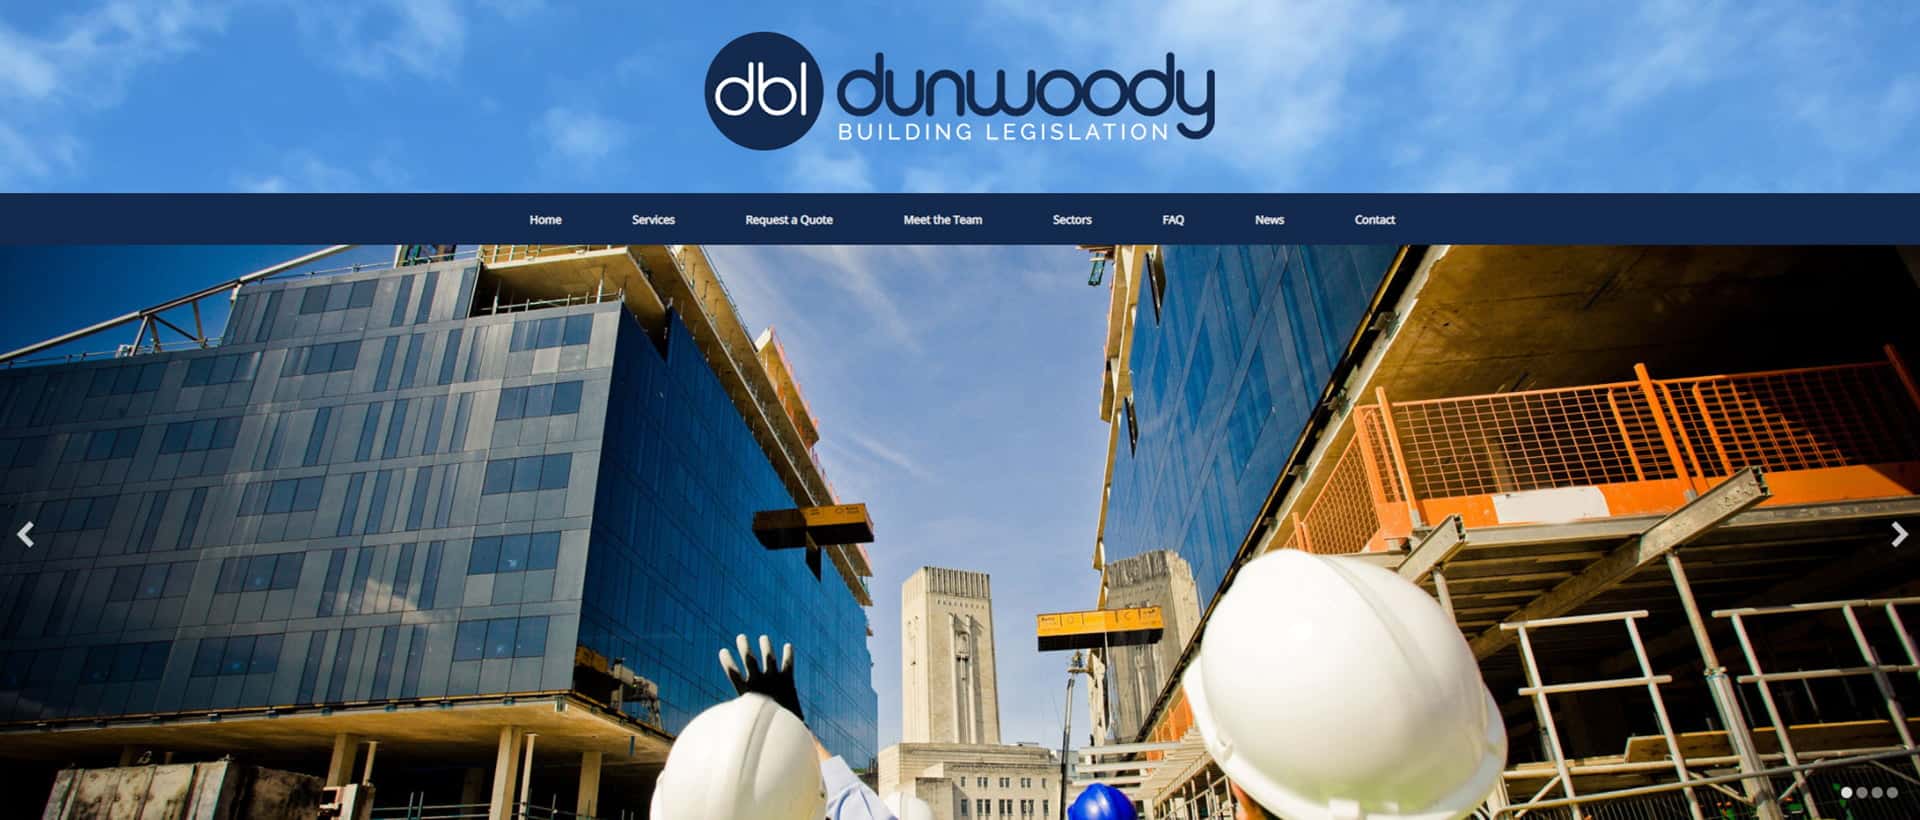 BWS_Dunwoody Building Legislation-After